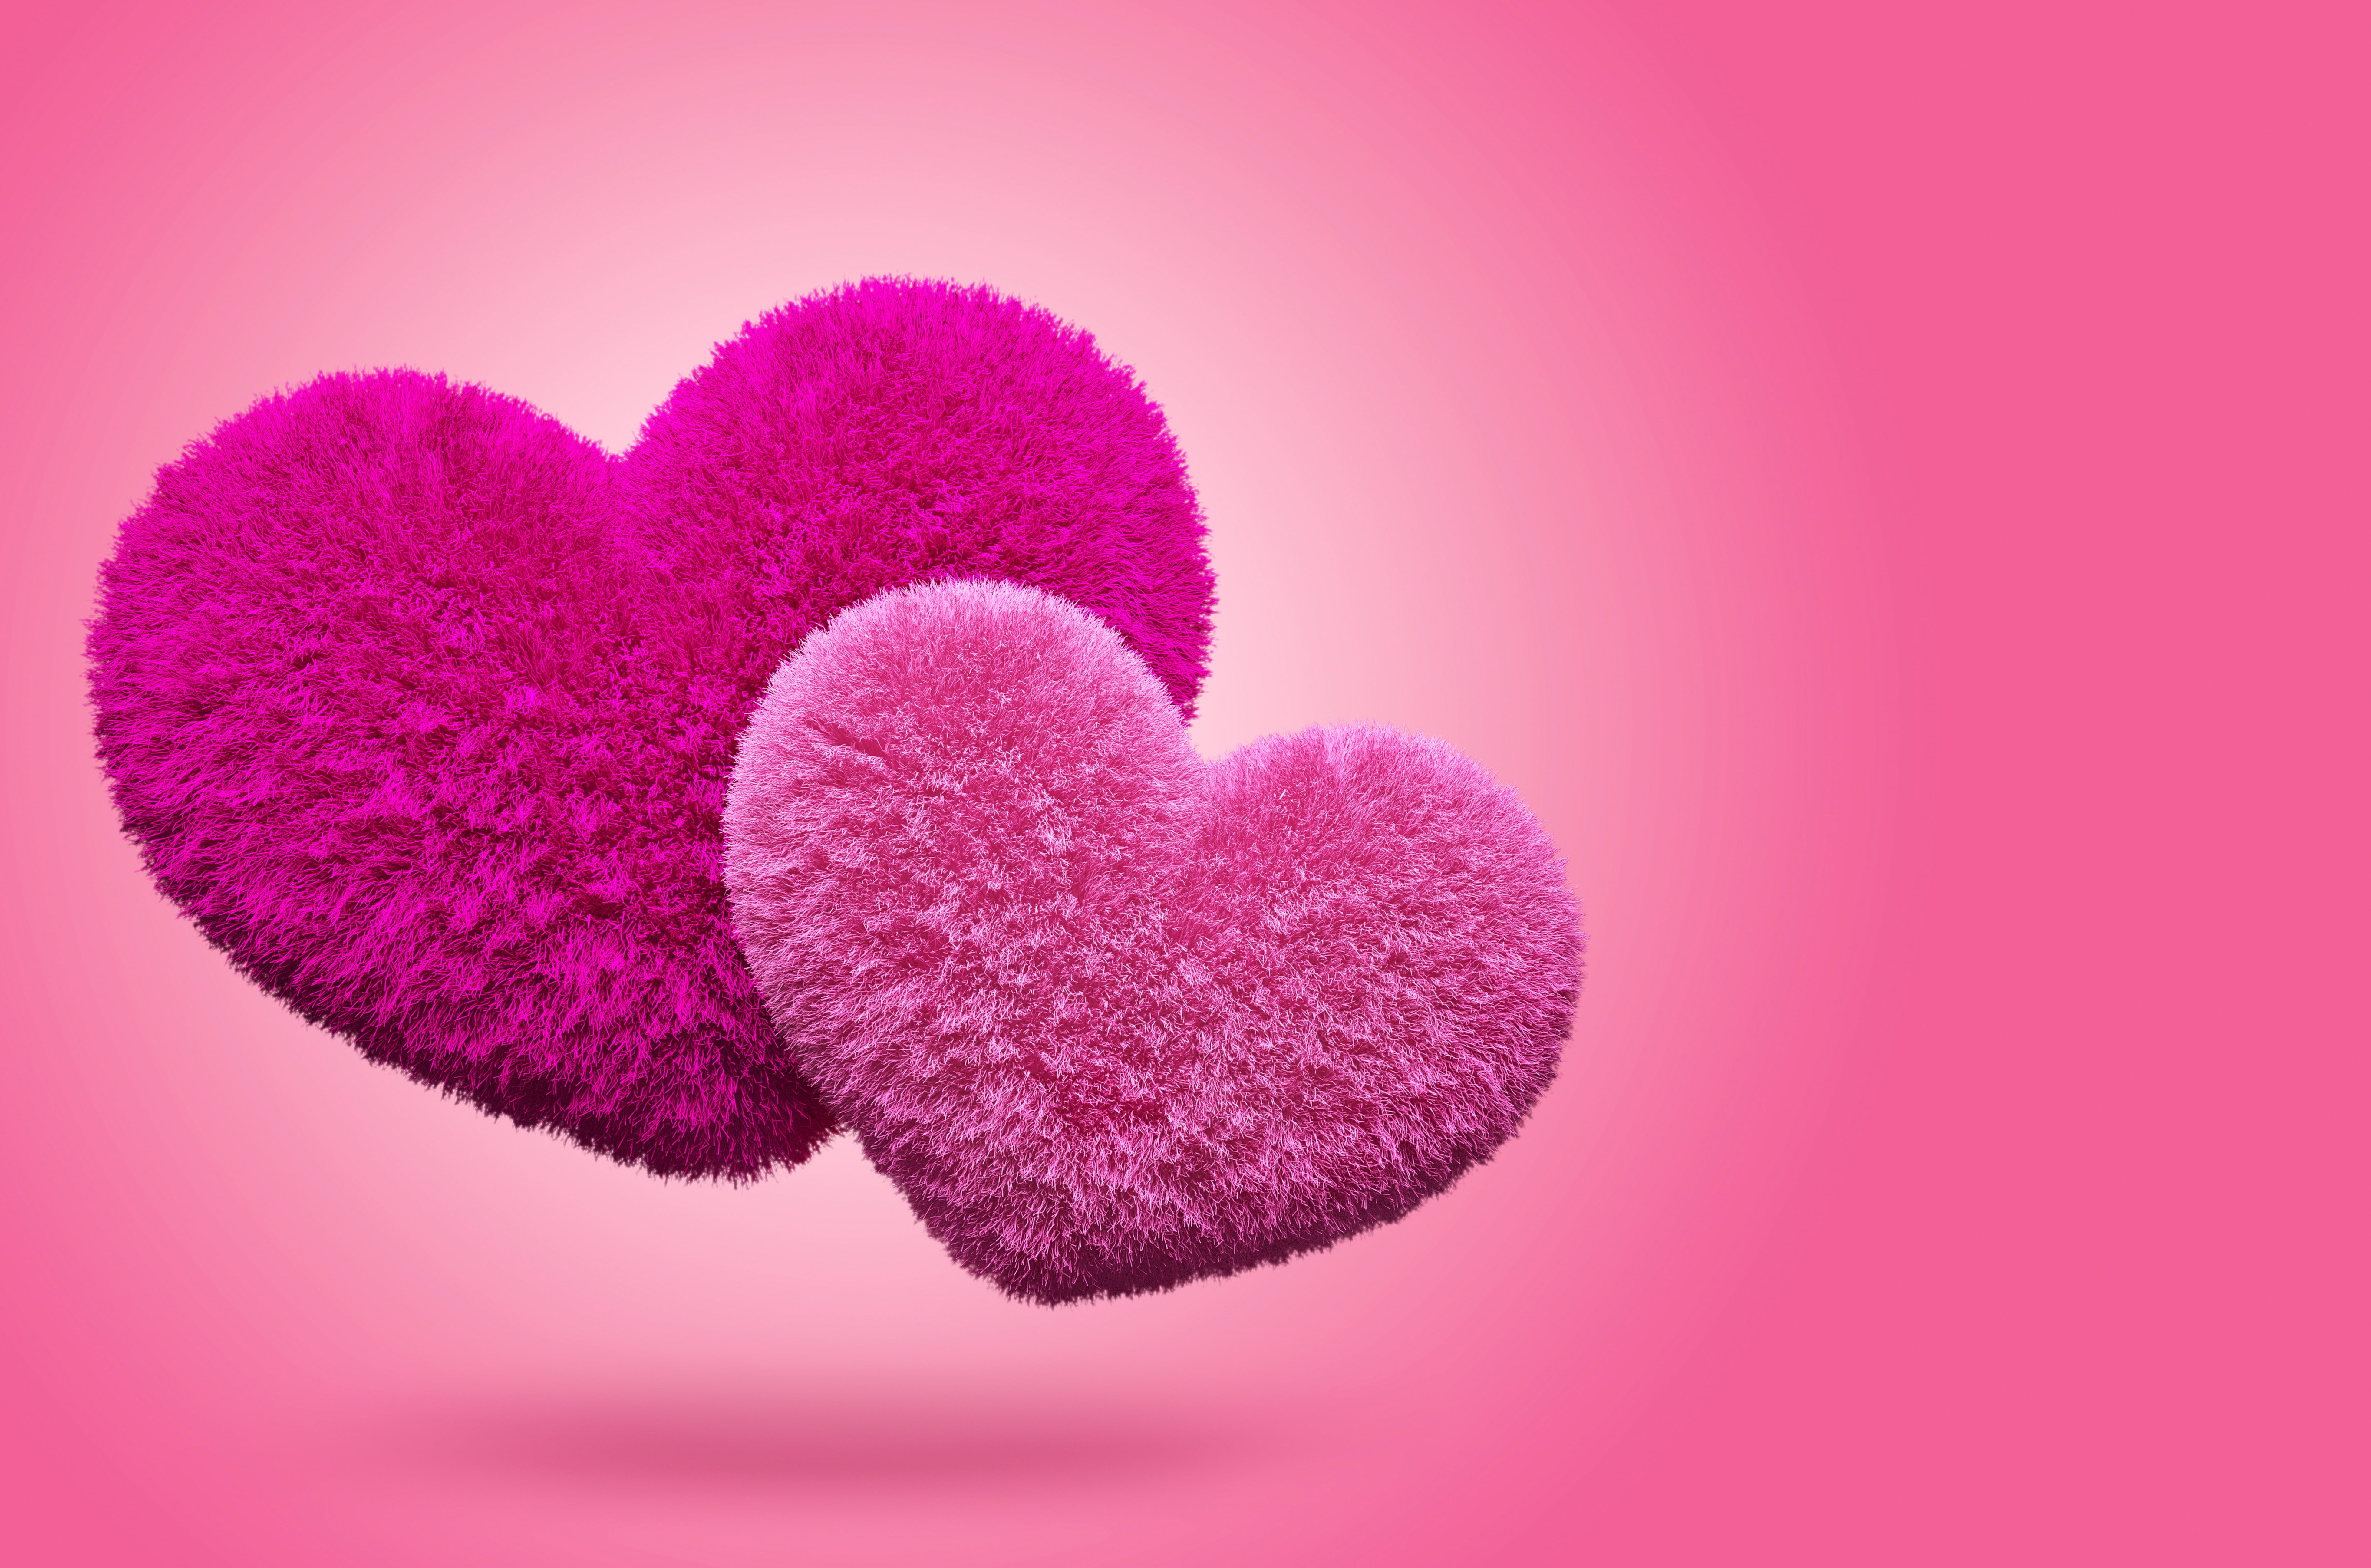 pink heart decor, hearts, love, fluffy, heart Shape, valentine's Day - Holiday